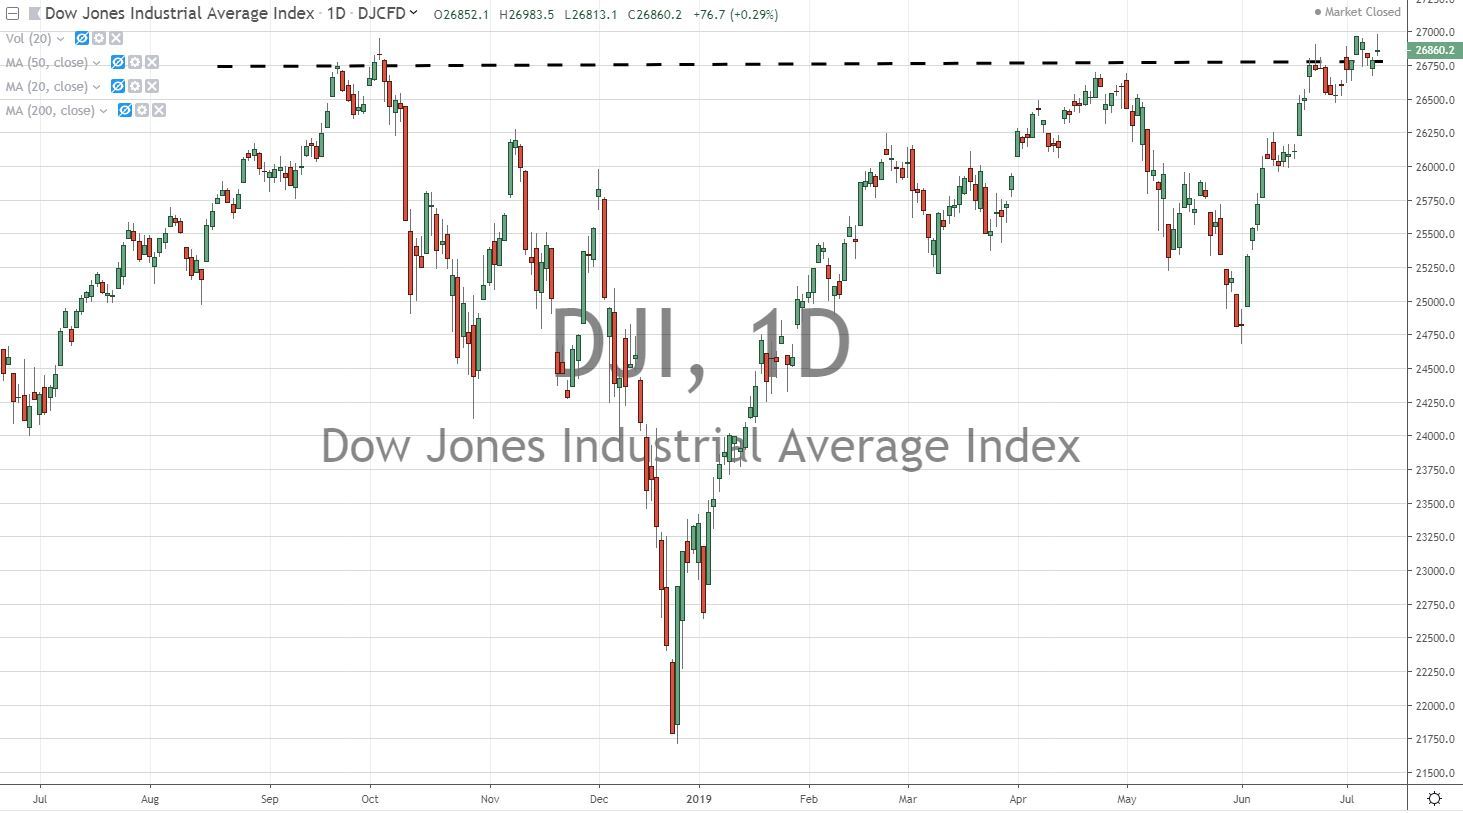 DJIA Chart 7.11.19